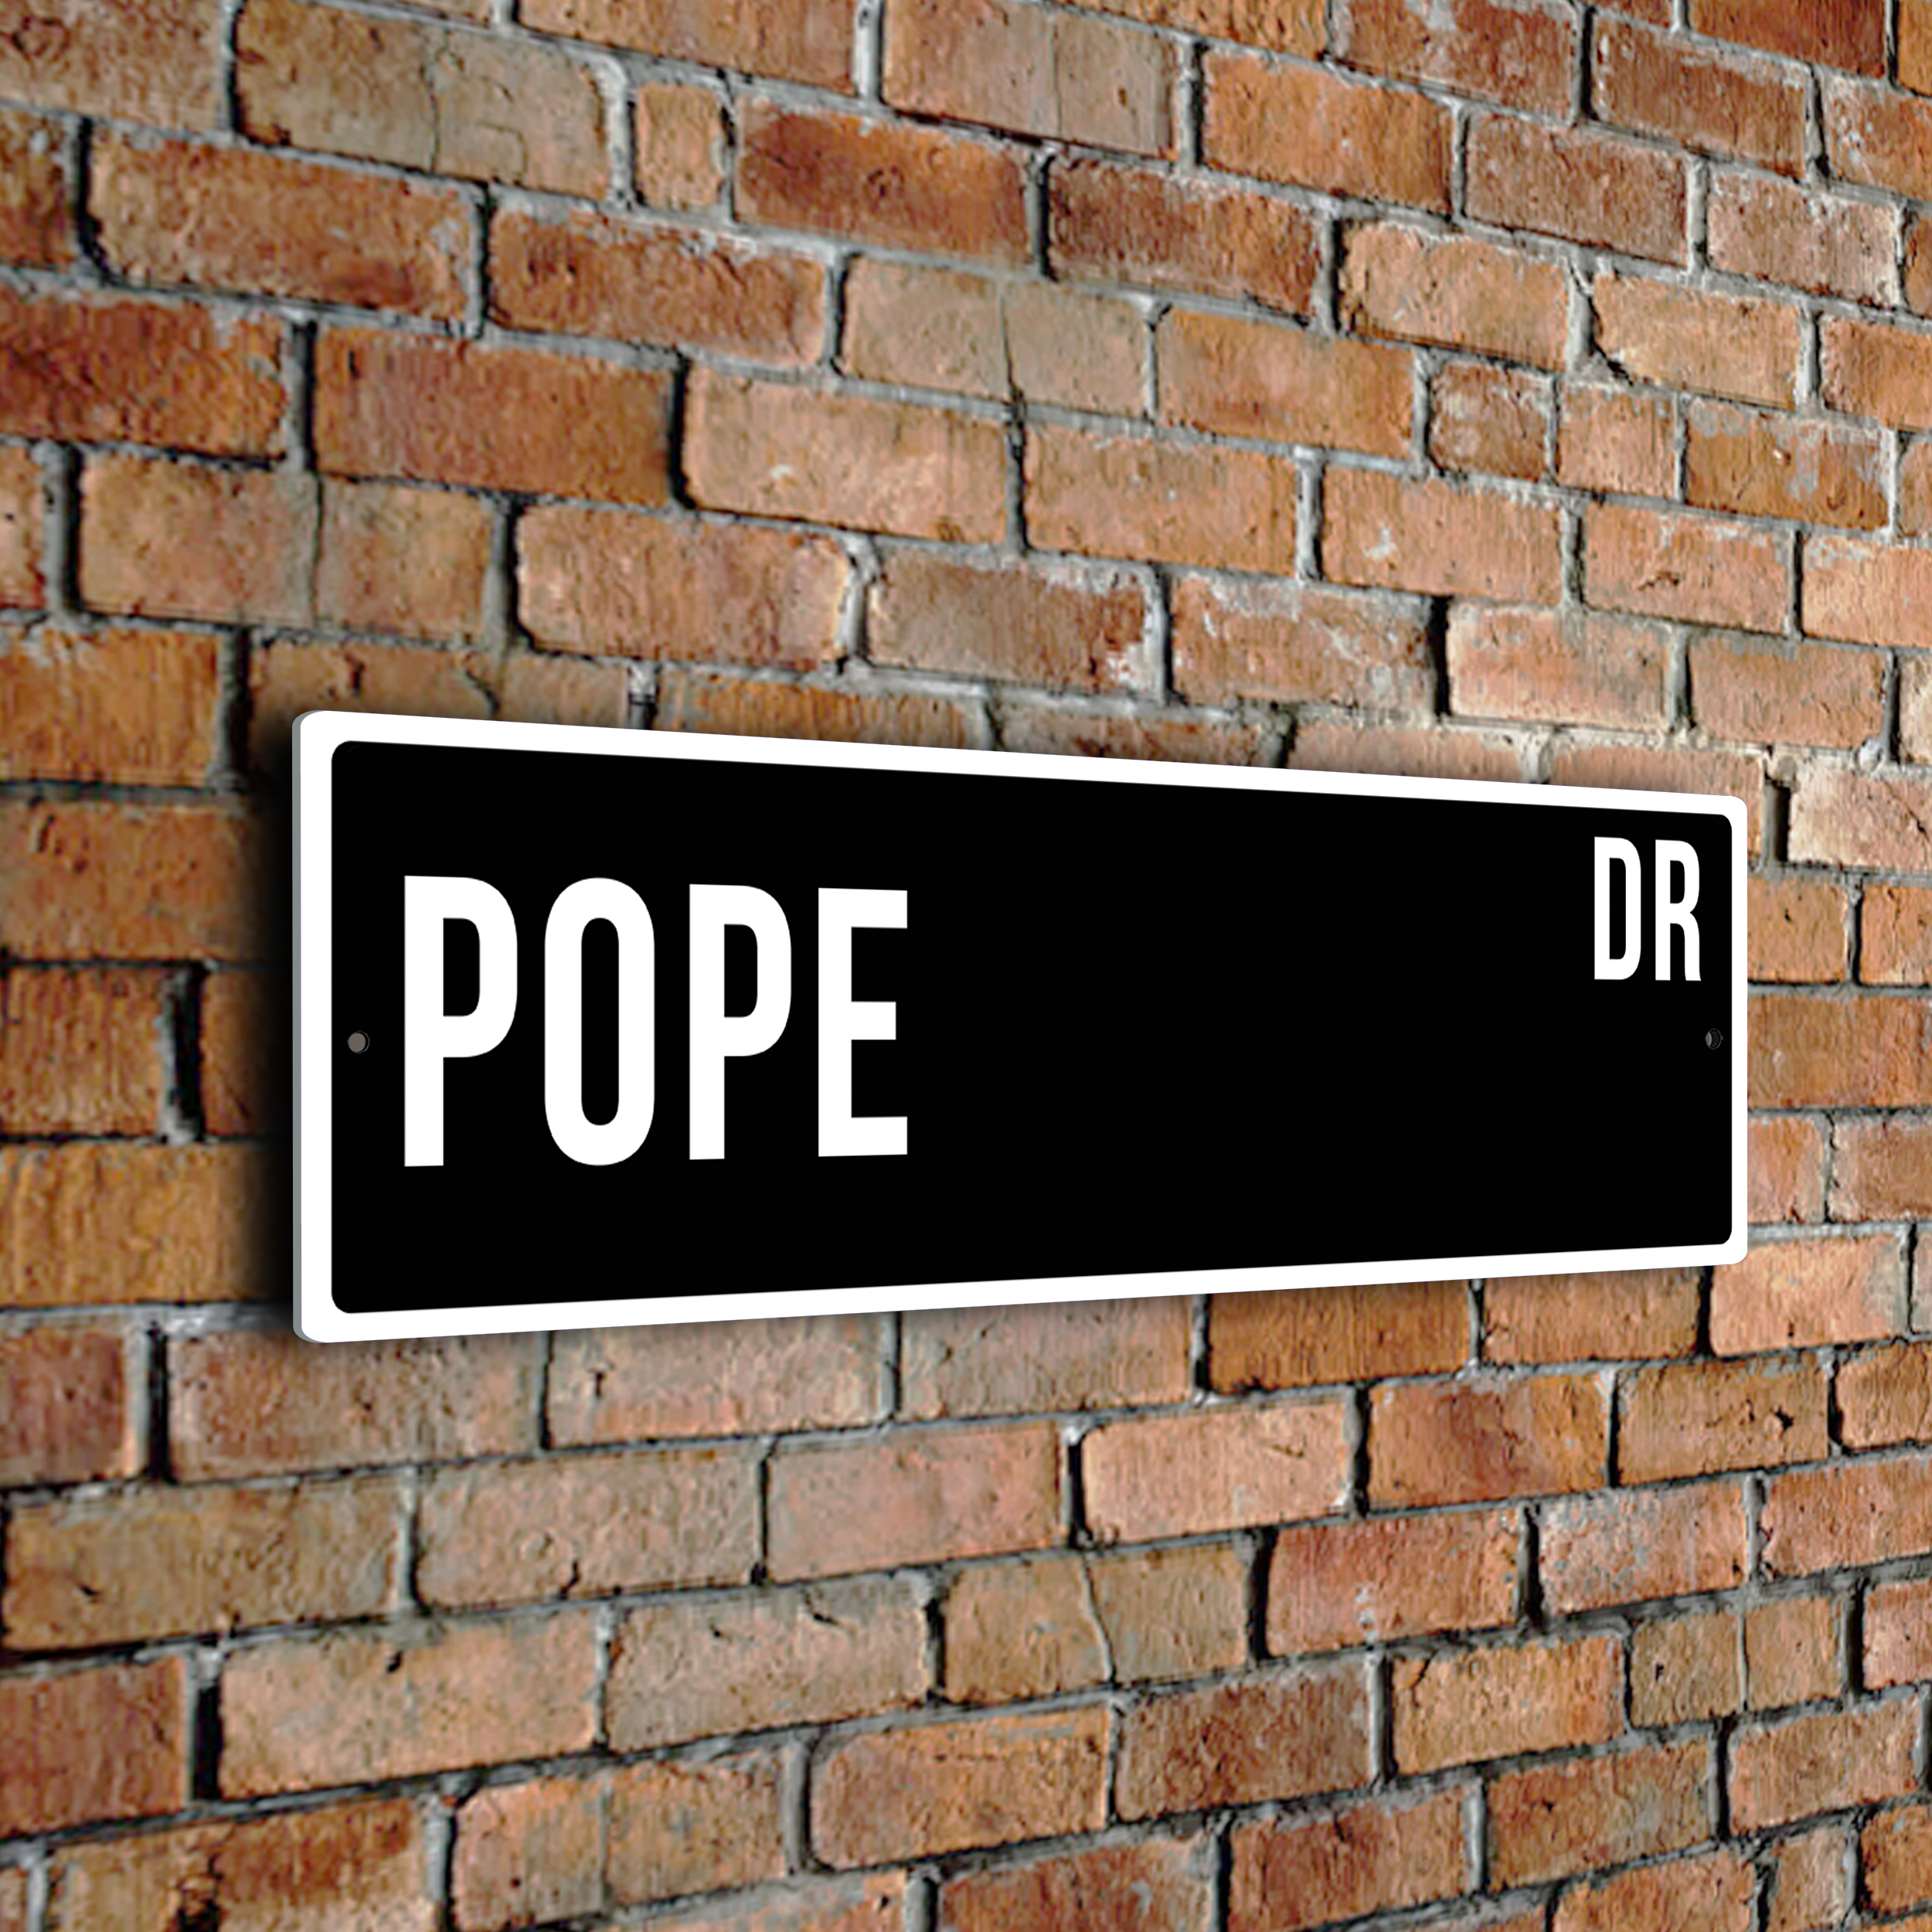 Pope street sign